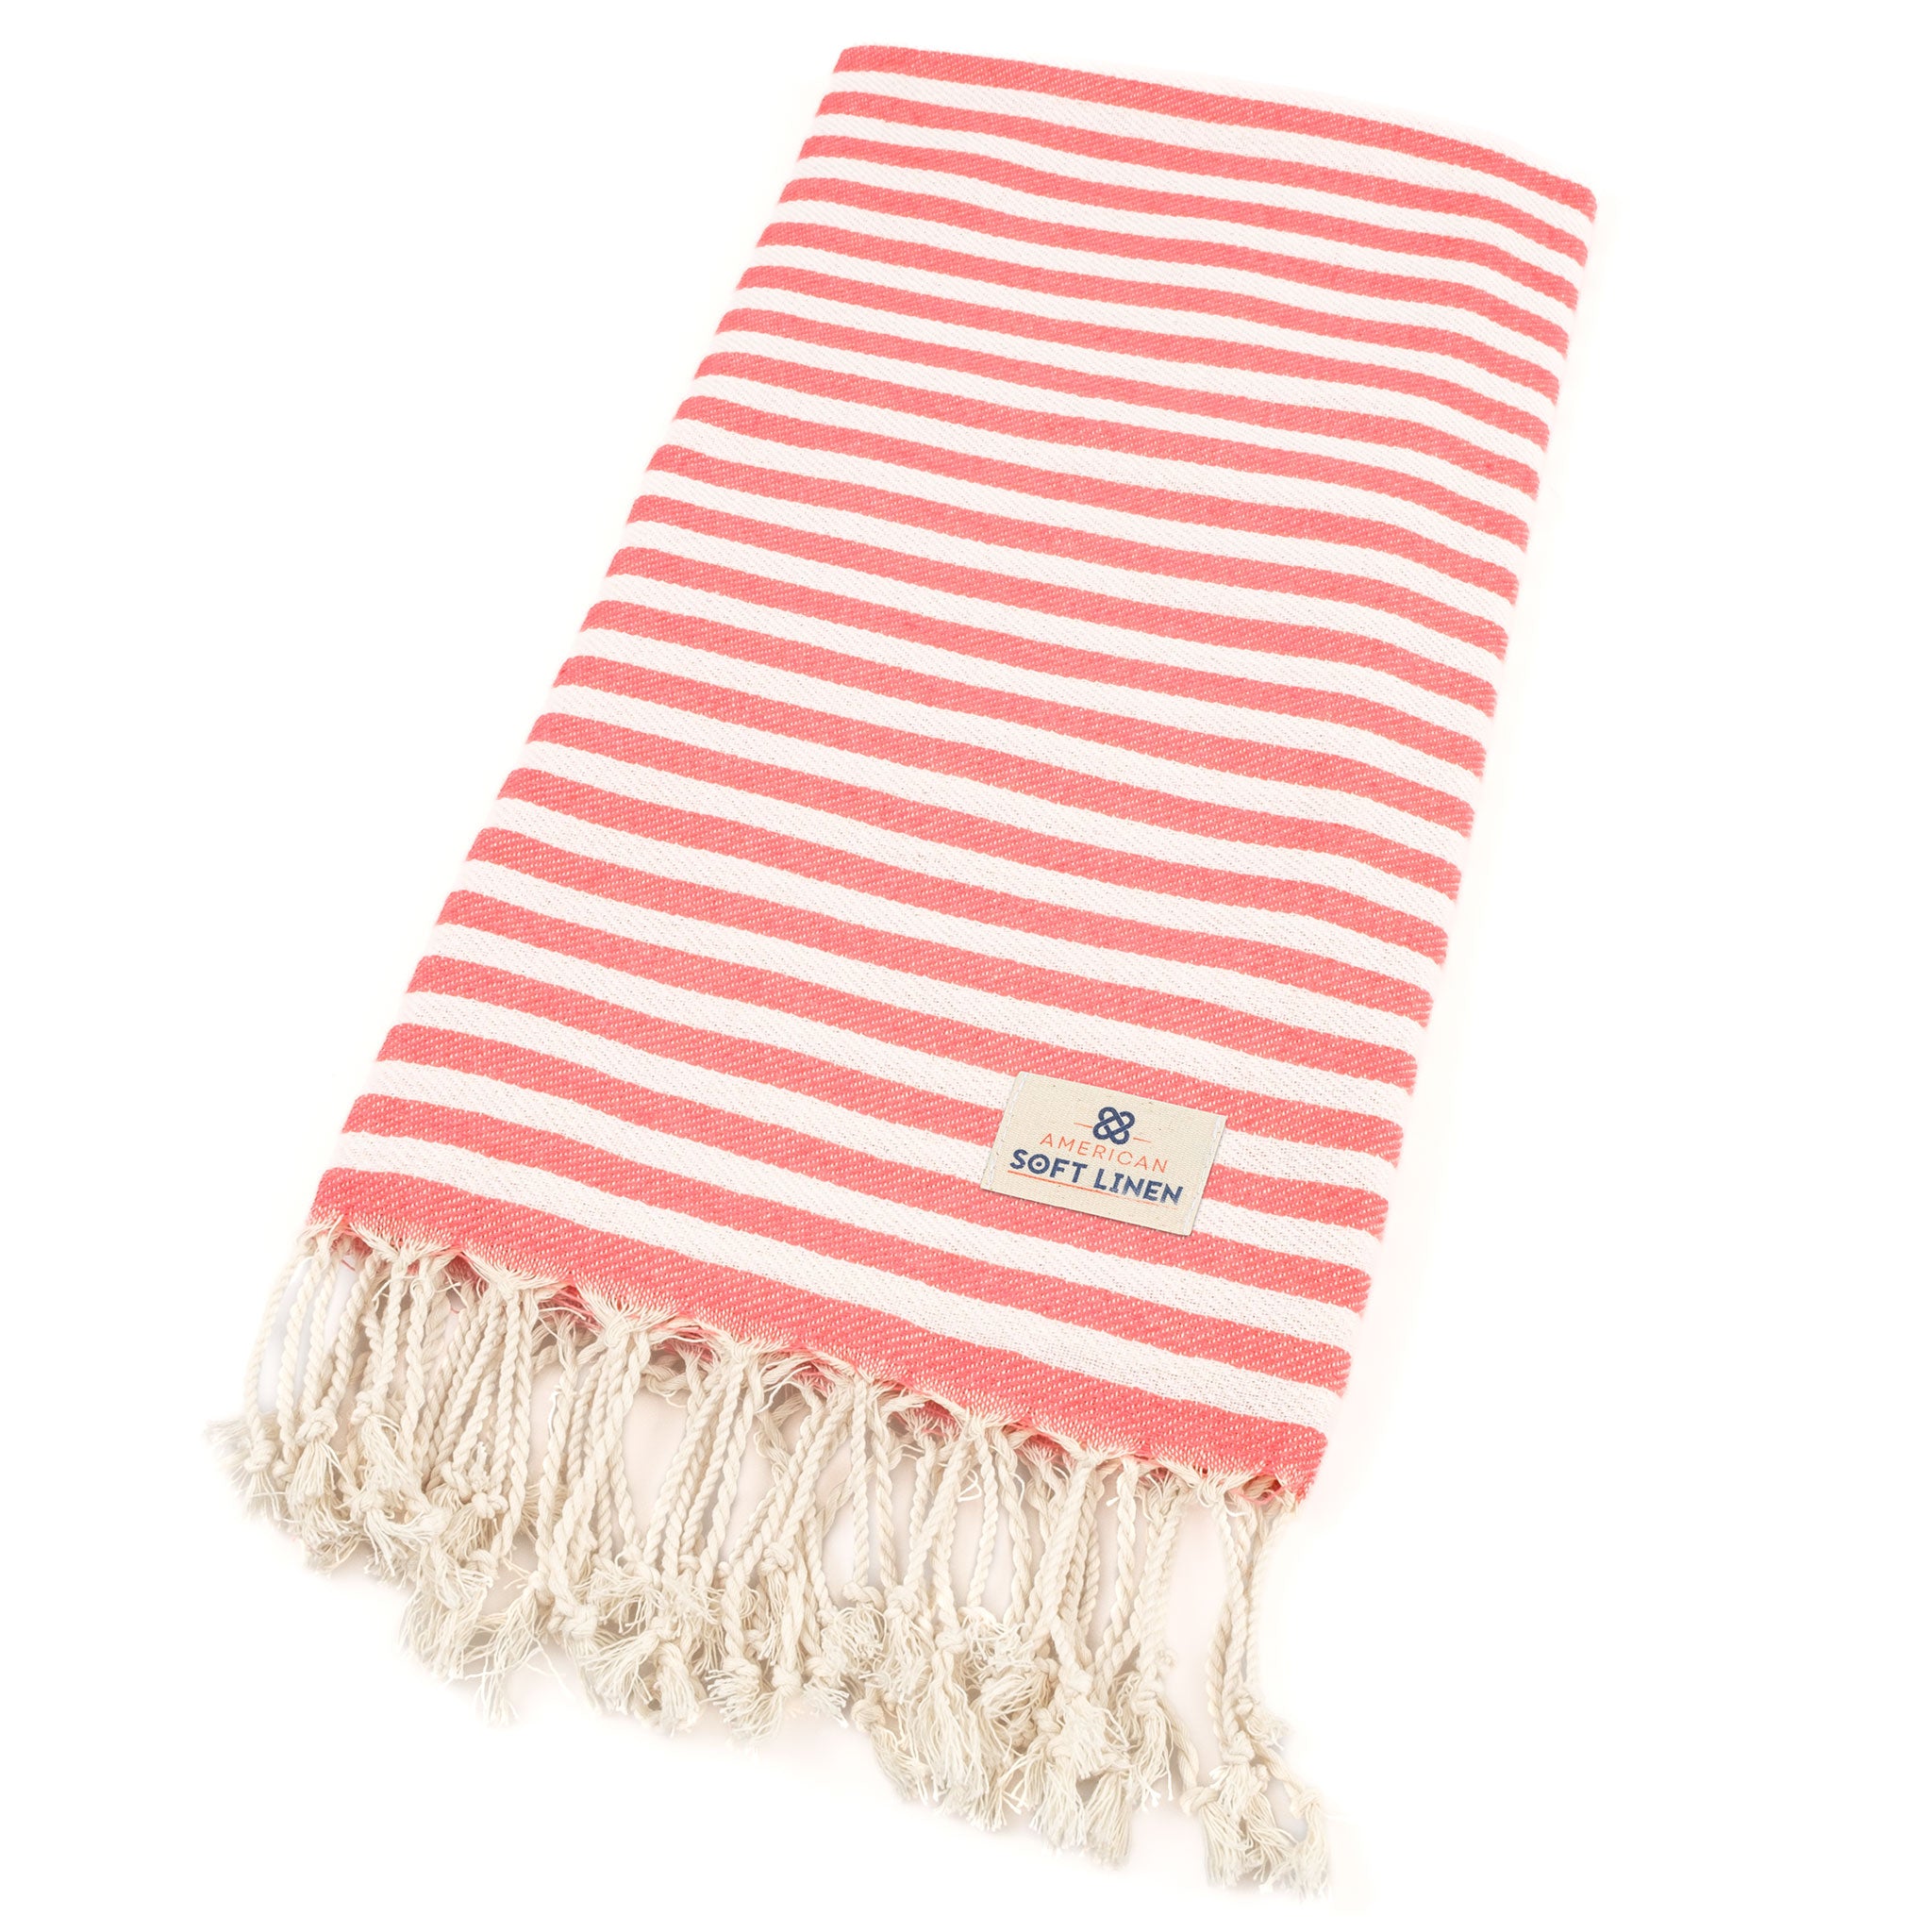 American Soft Linen - 100% Cotton Turkish Peshtemal Towels 40x70 Inches - Coral-Stripe - 5